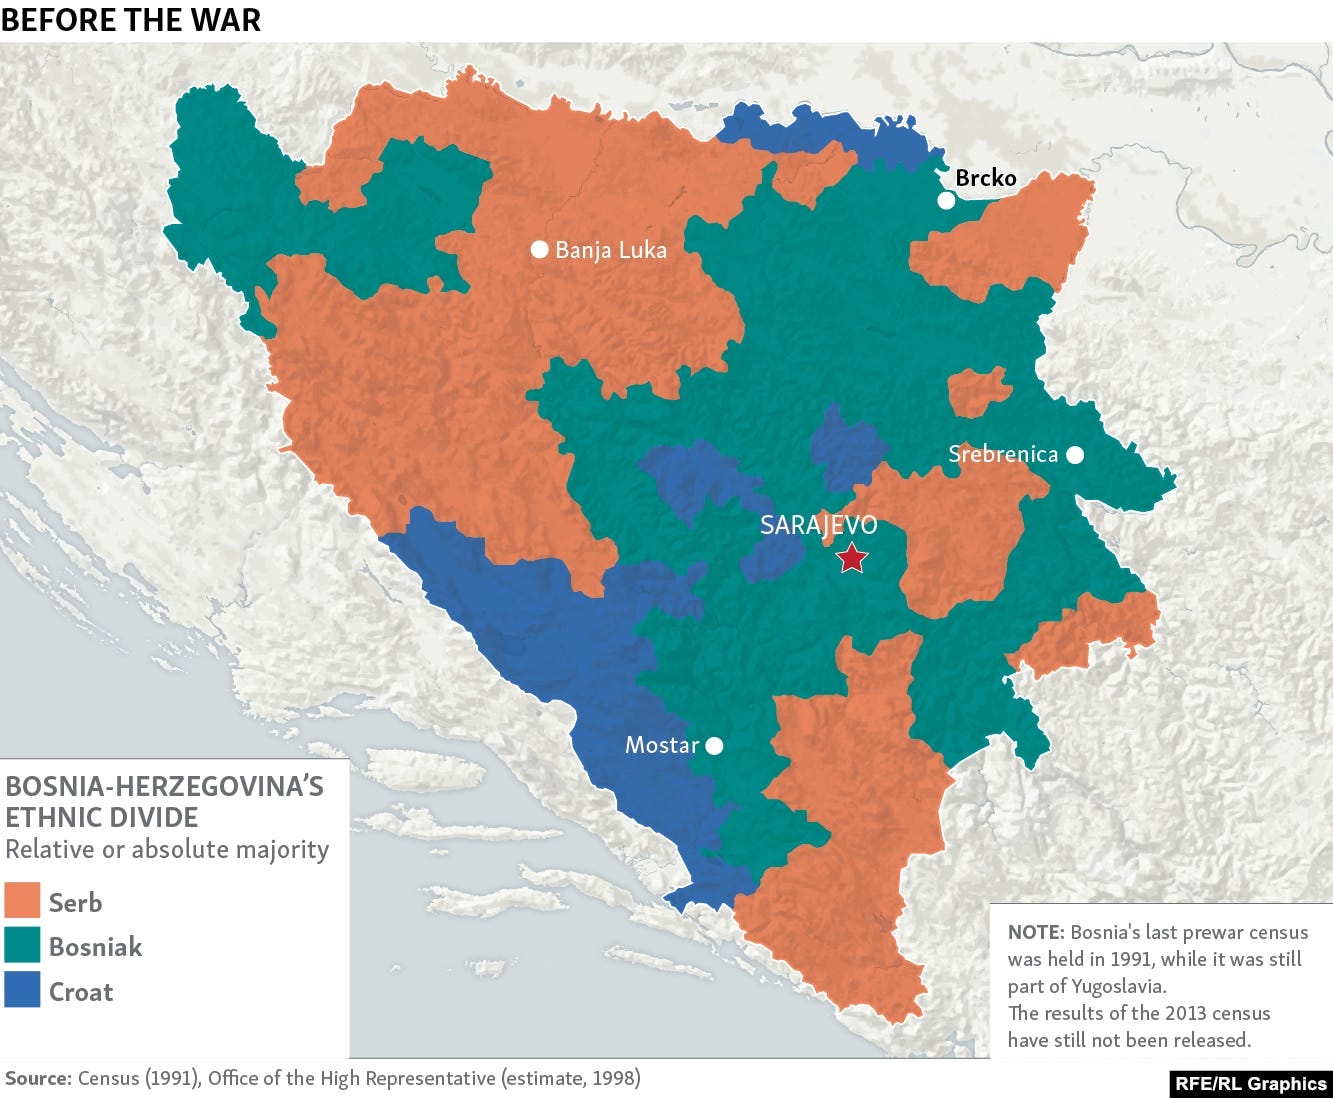 Map of the ethnic breakdown of Bosnia pre-war - Serb, Croat and Bosniak. 